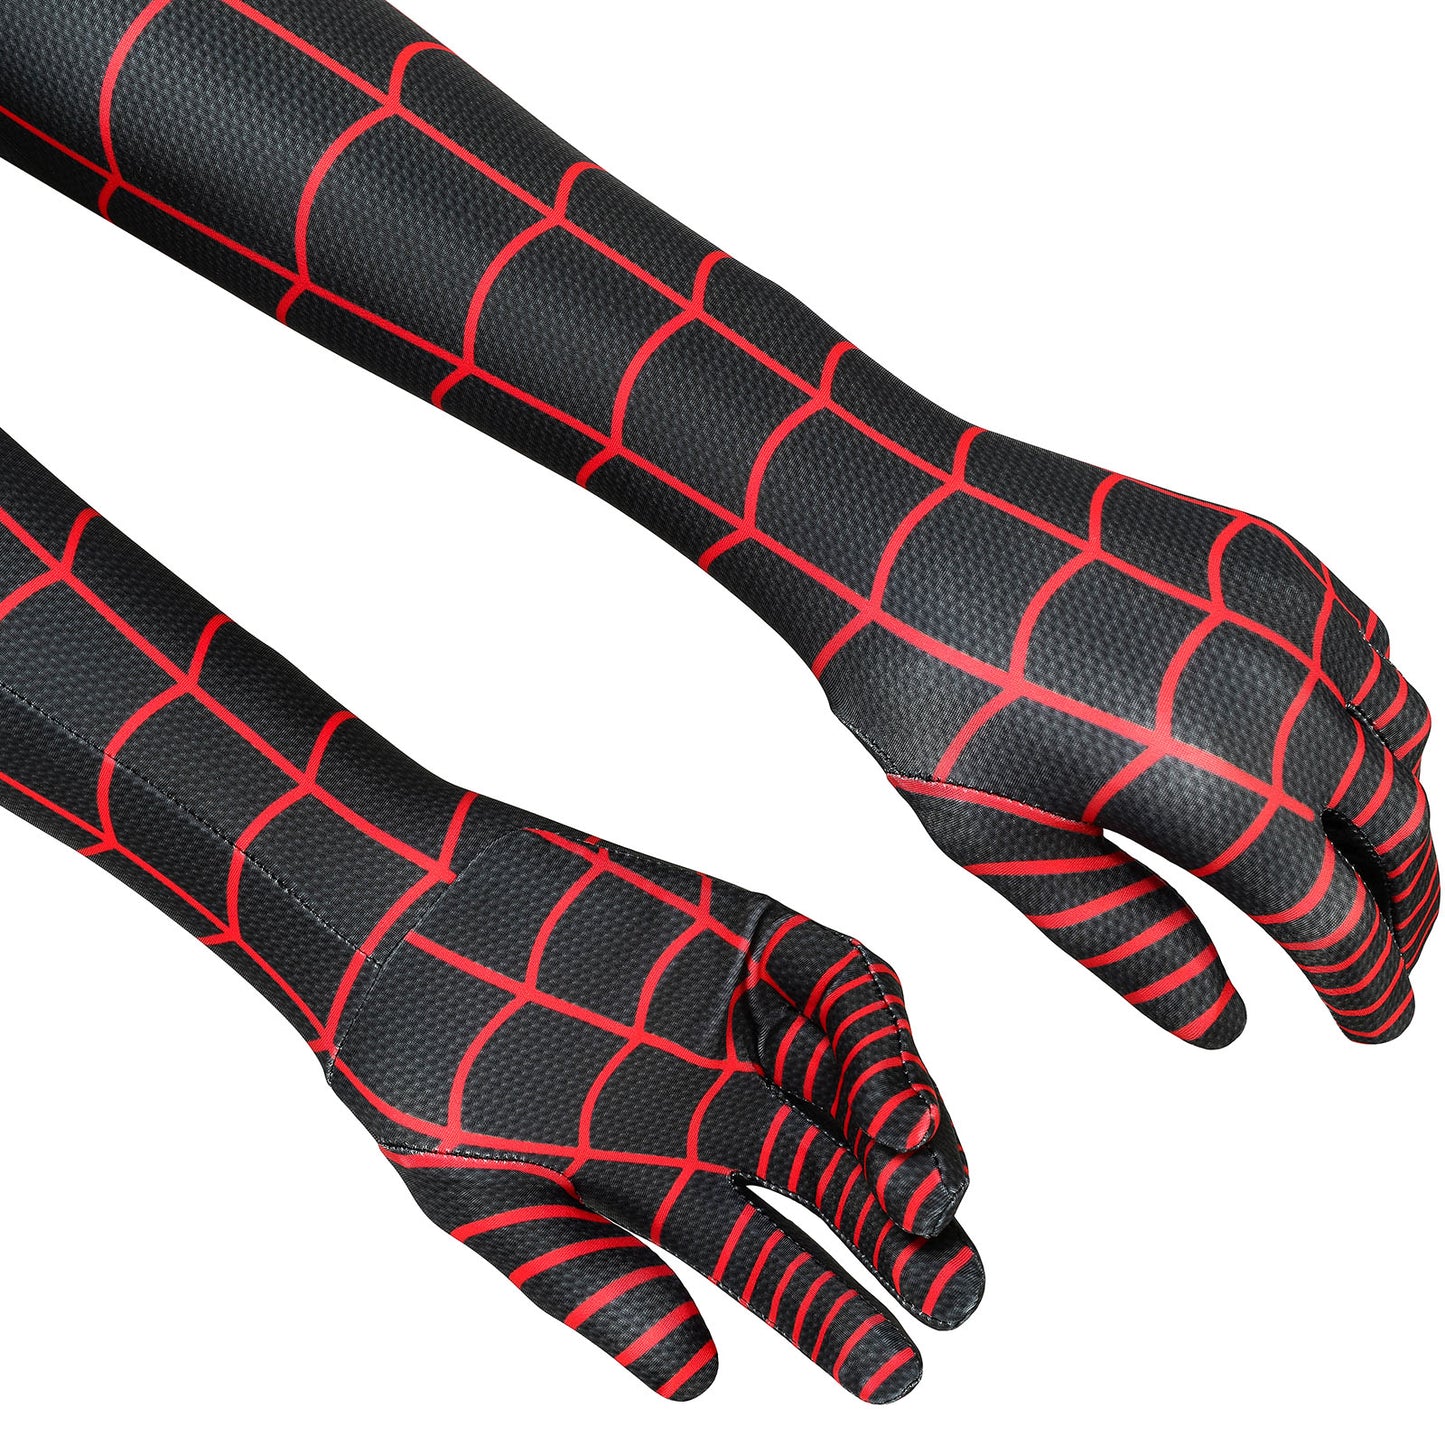 Marvel's Spider-man Secret War Suit Male Jumpsuit Cosplay Costumes